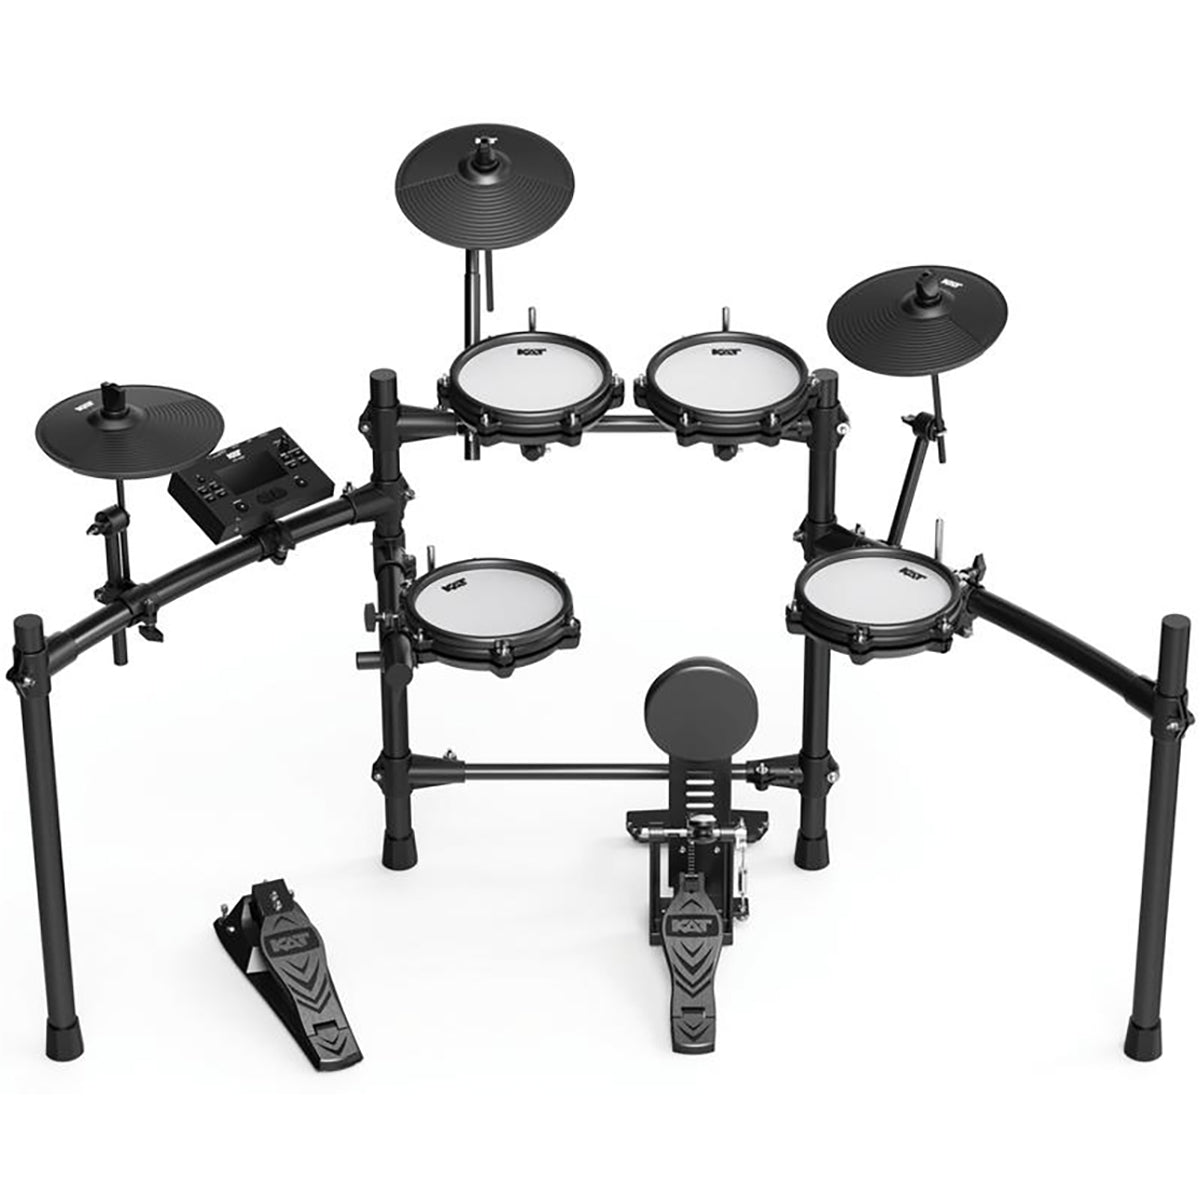 Kat Percussion KT-150 Electronic Drum Set - View 1